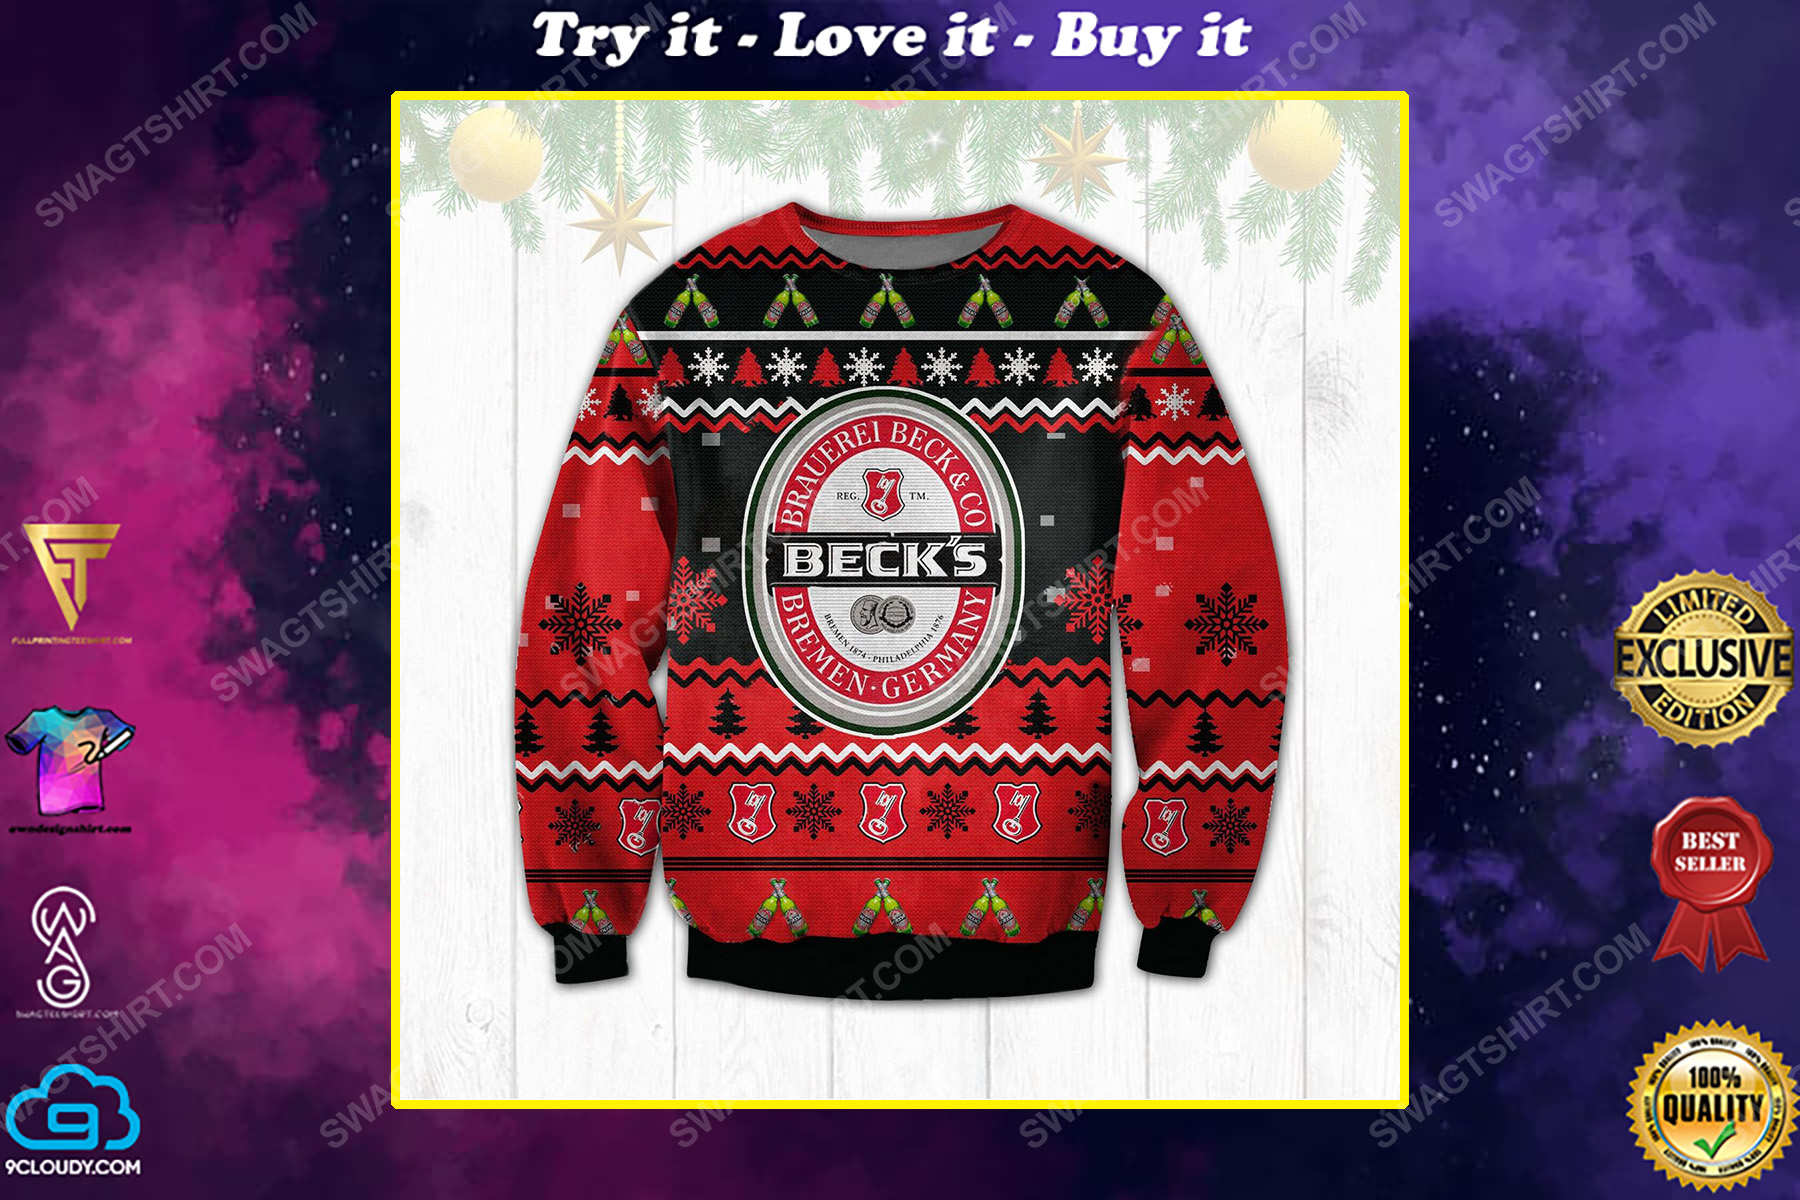 Becks beer germany ugly christmas sweater